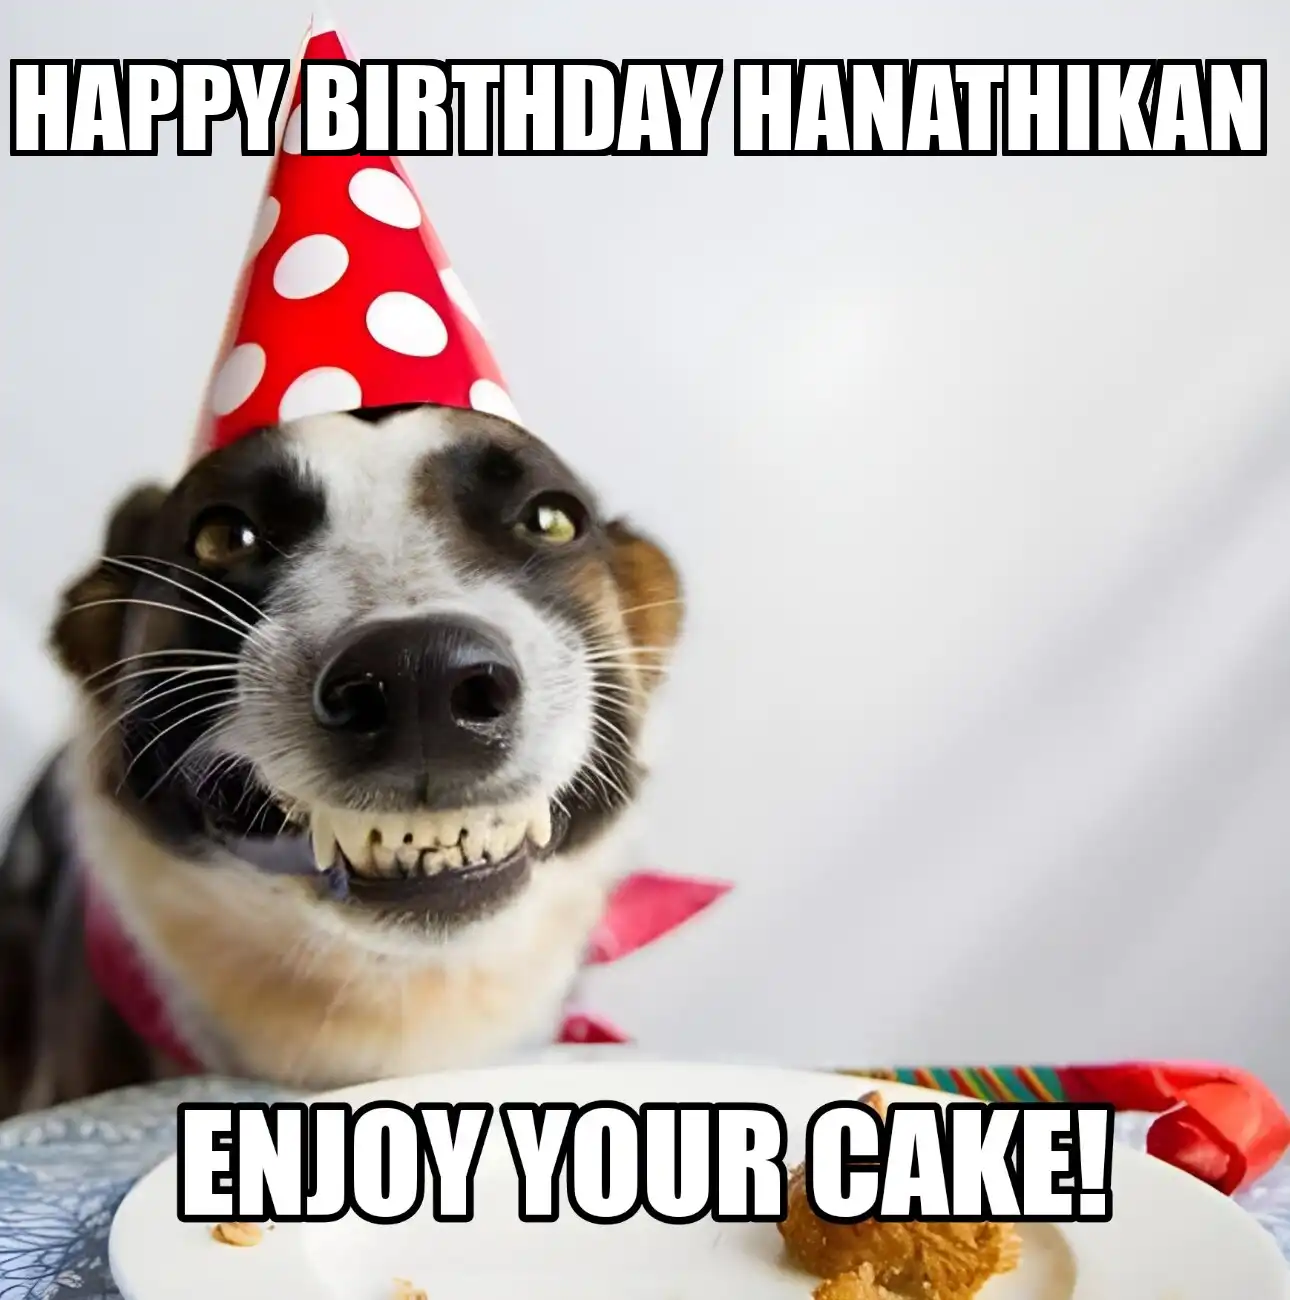 Happy Birthday Hanathikan Enjoy Your Cake Dog Meme